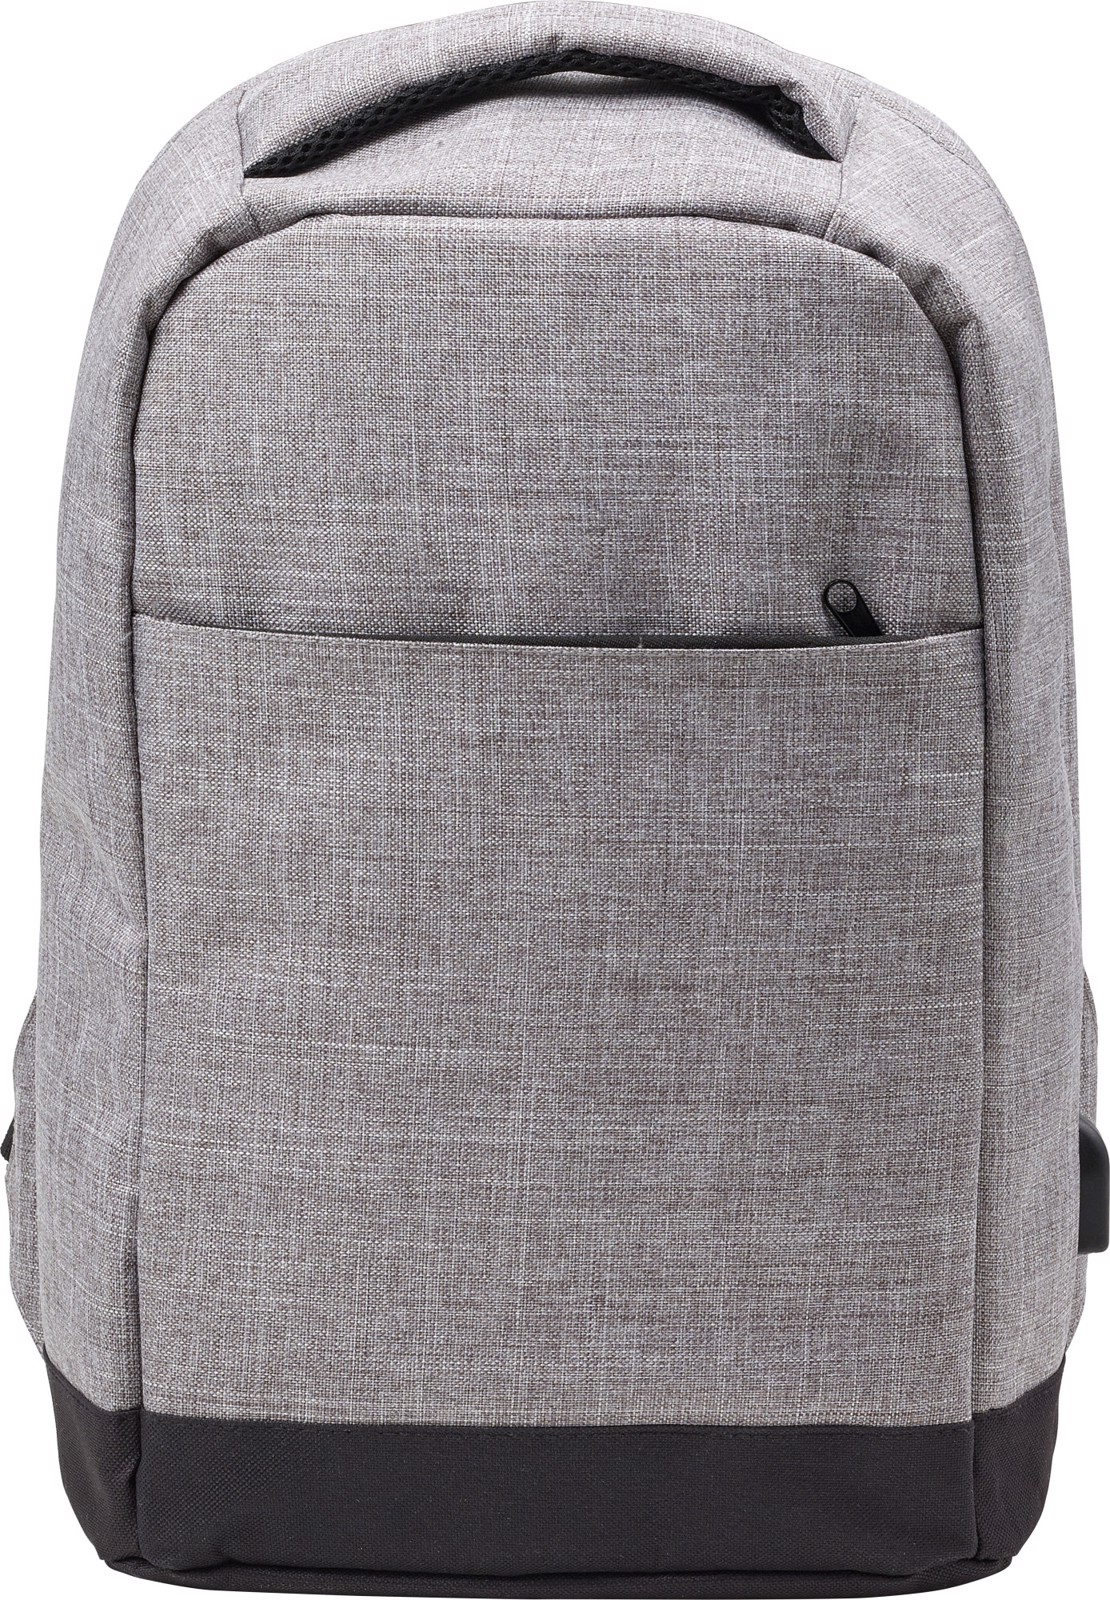 Polyester (600D) backpack - Light Grey